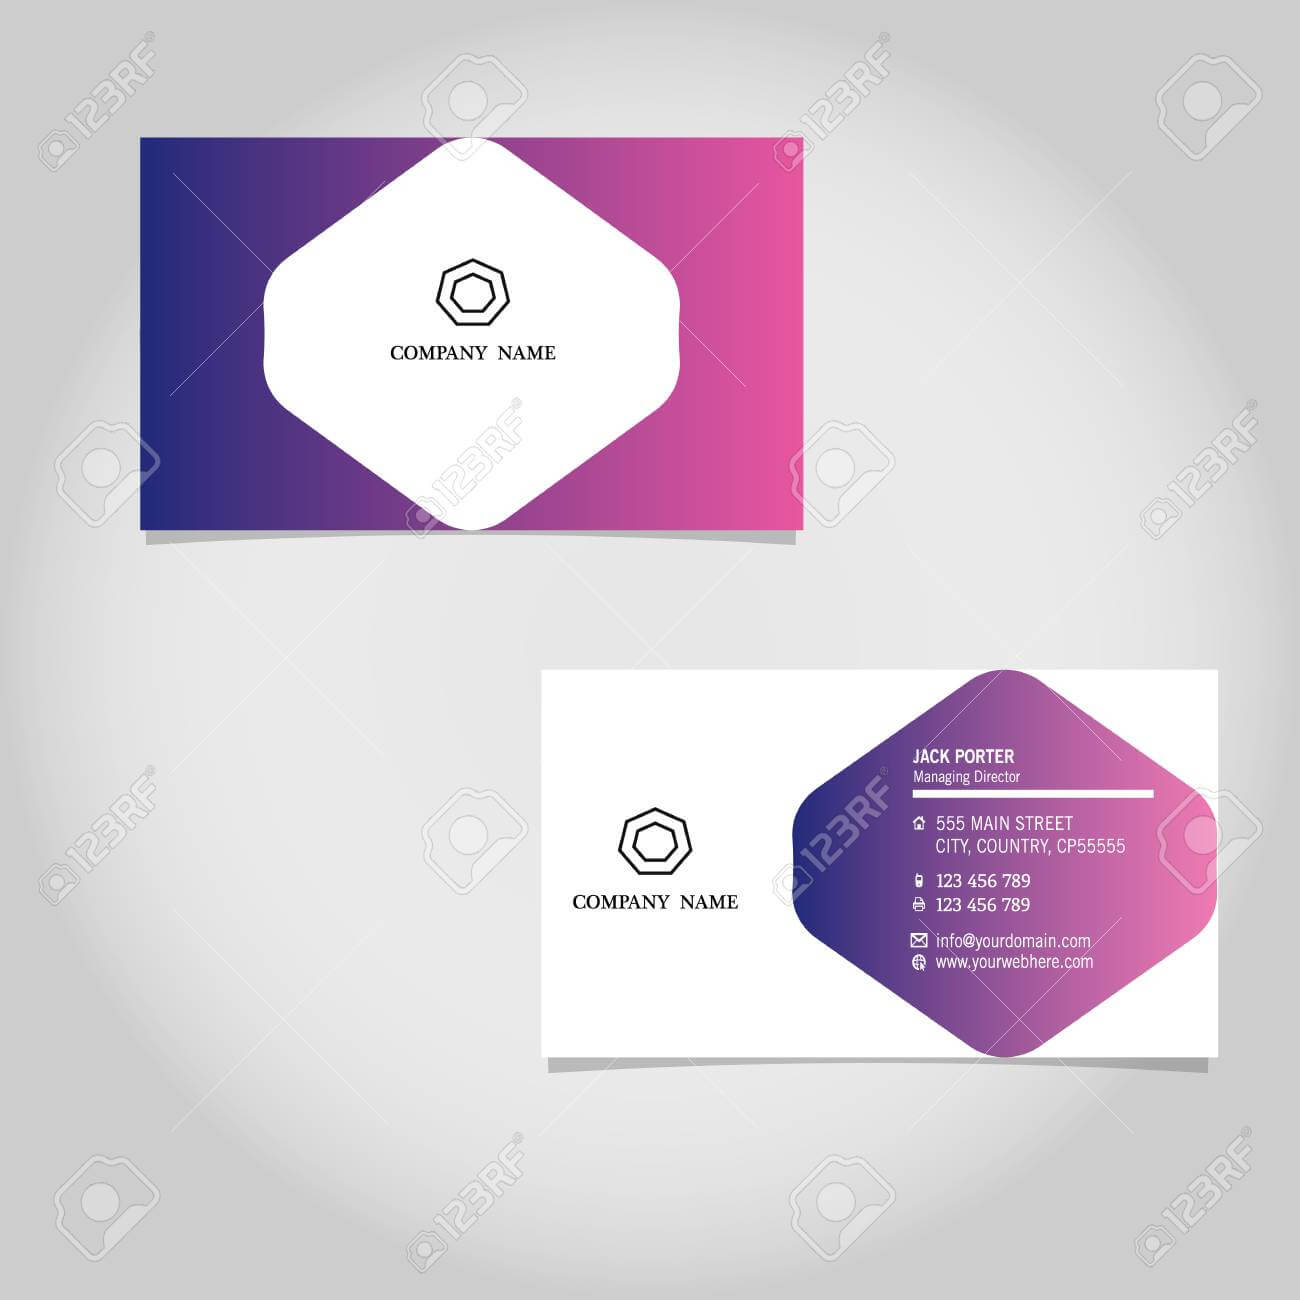 Vector Business Card Template Design Adobe Illustrator With Adobe Illustrator Card Template